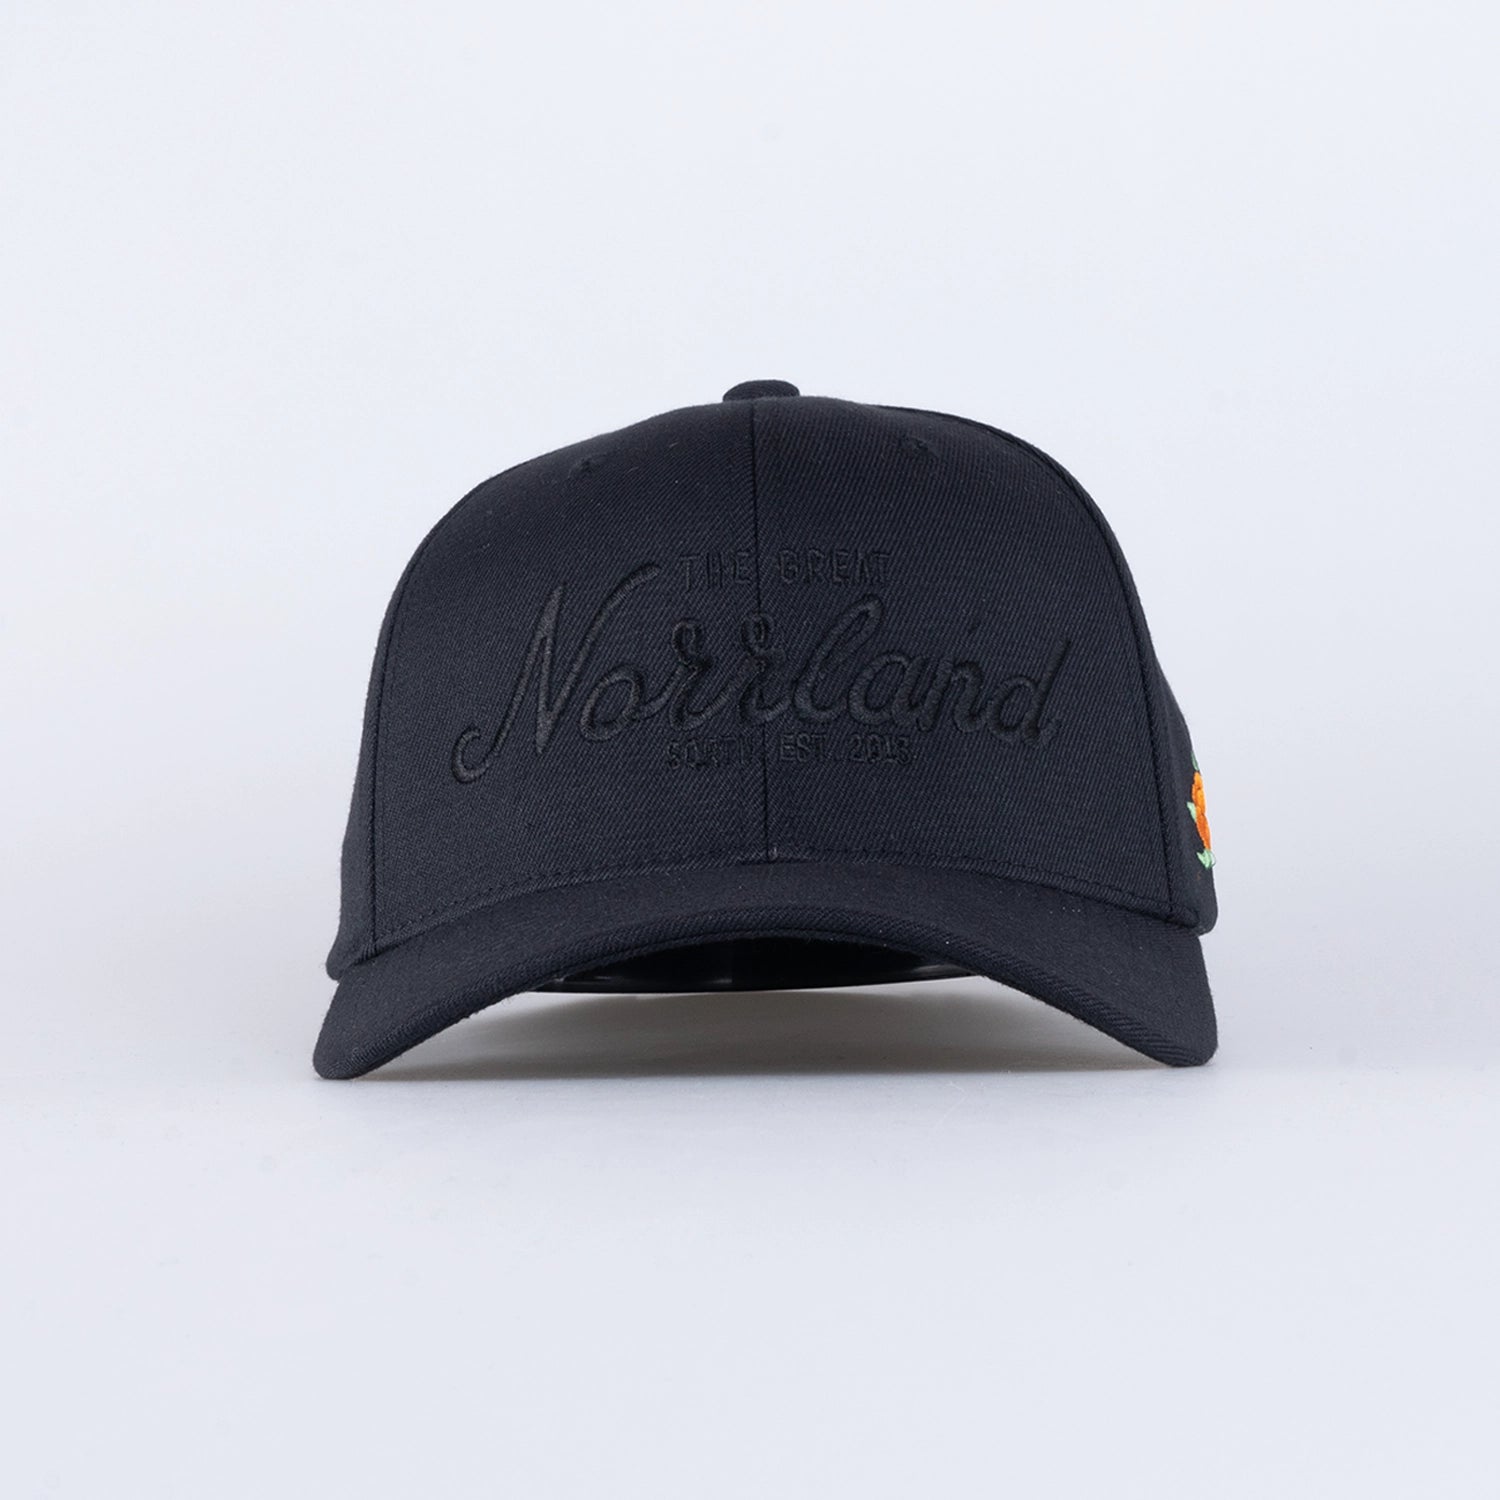 GREAT NORRLAND 120 CAP - ALL BLACK